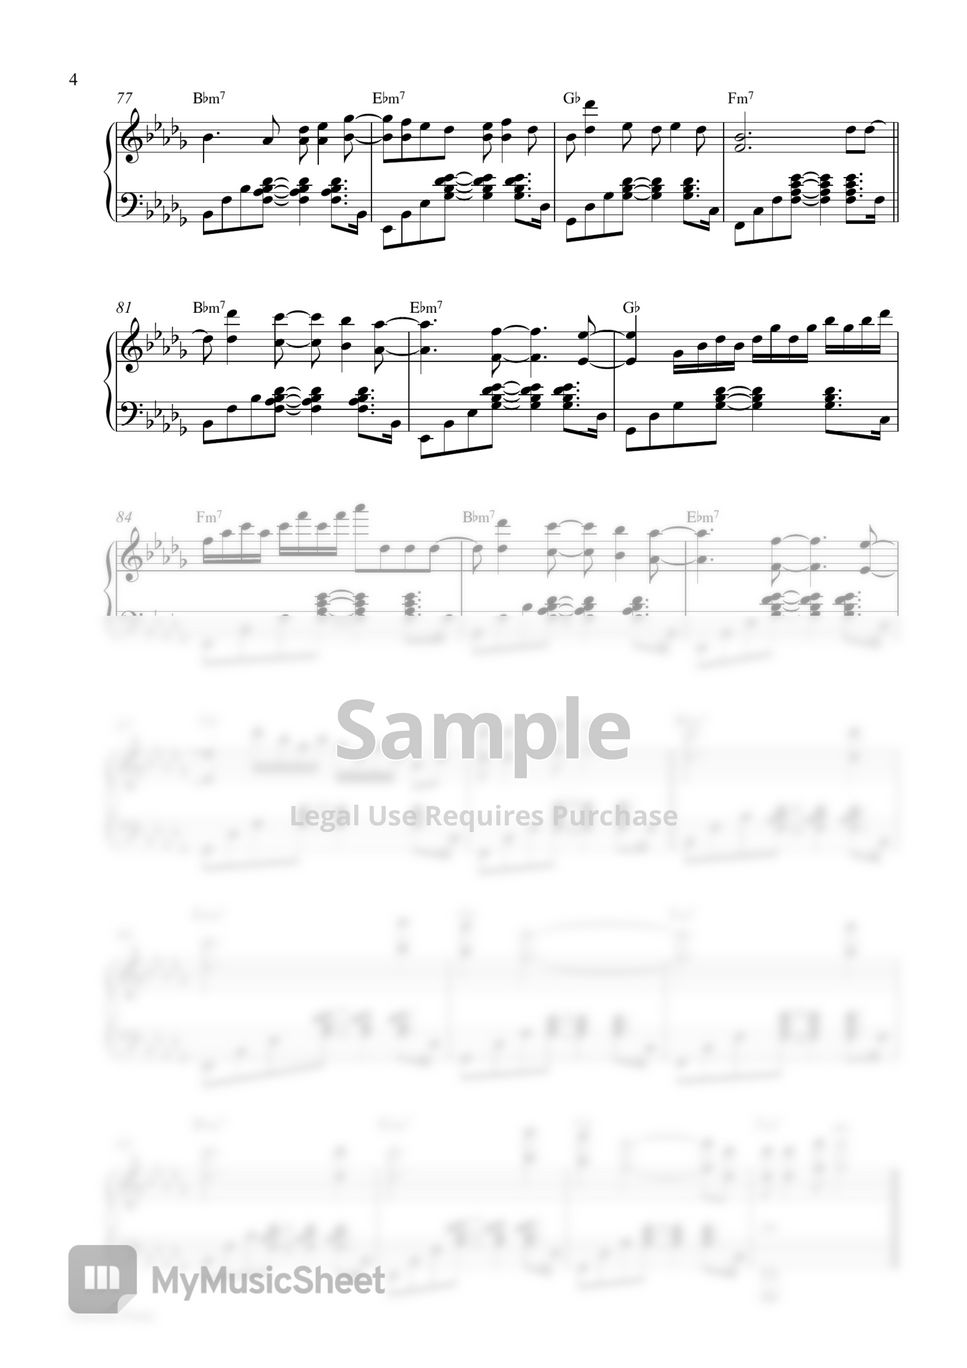 Cold Heart (PNAU Remix) sheet music for piano solo (PDF)